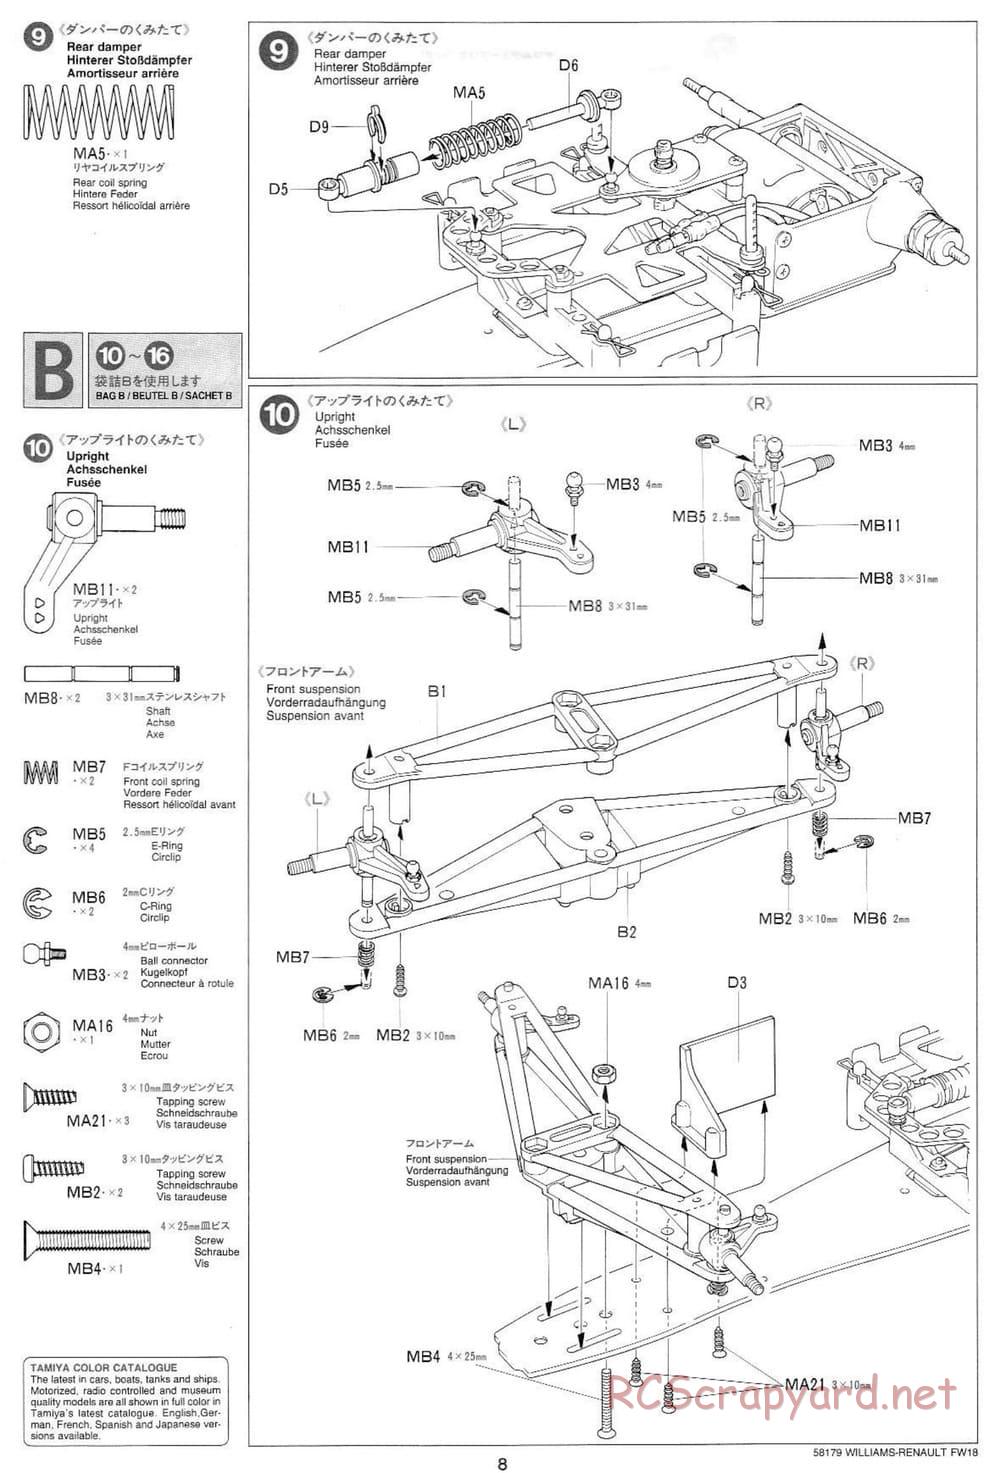 Tamiya - Williams Renault FW18 - F103RS Chassis - Manual - Page 8